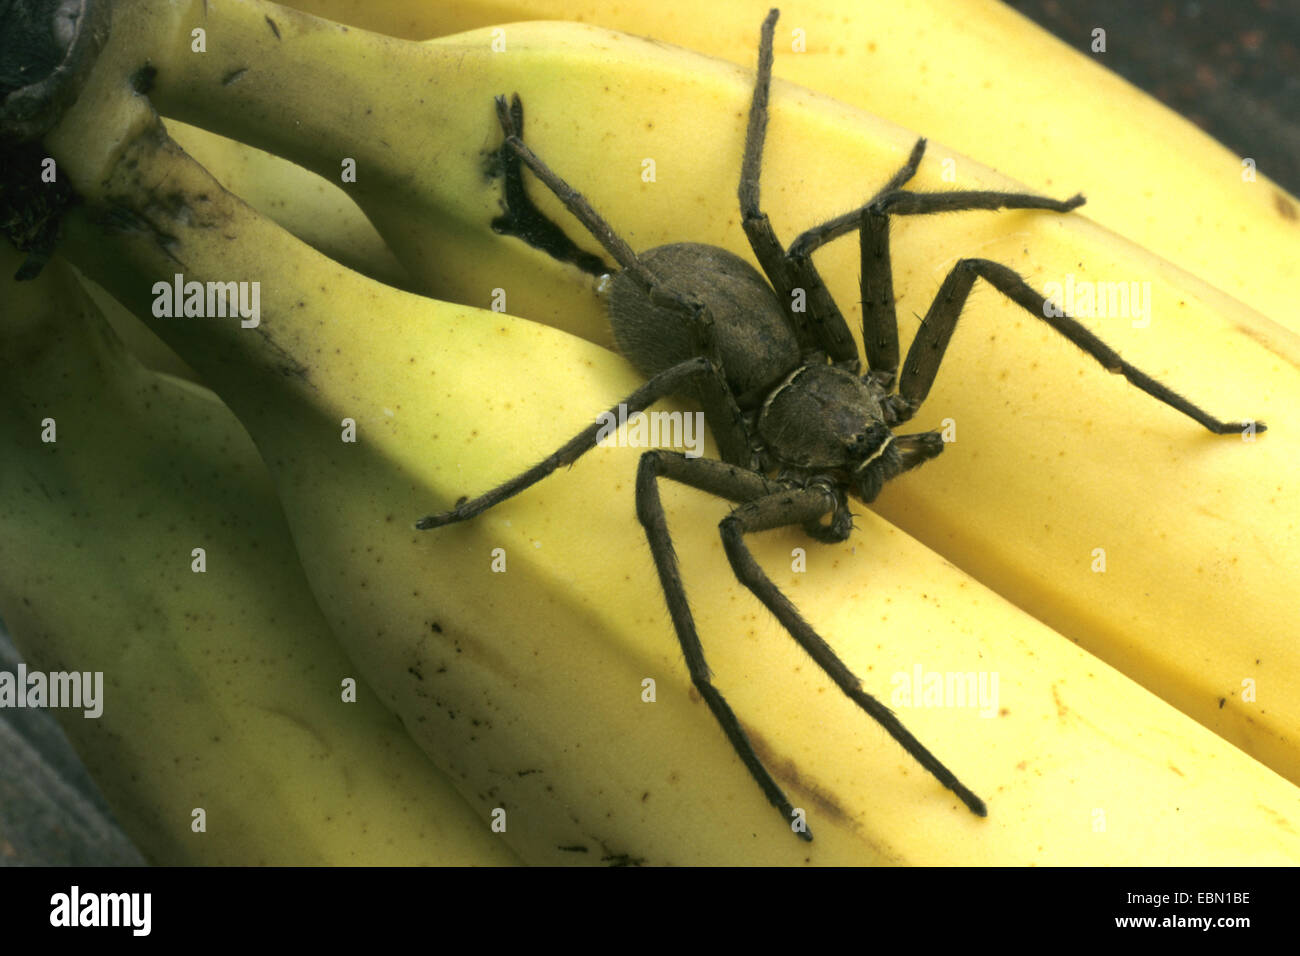 Banana spider, large brown spider, huntsman spider (Heteropoda venatoria), on ripe bananas, Dominican Republic Stock Photo